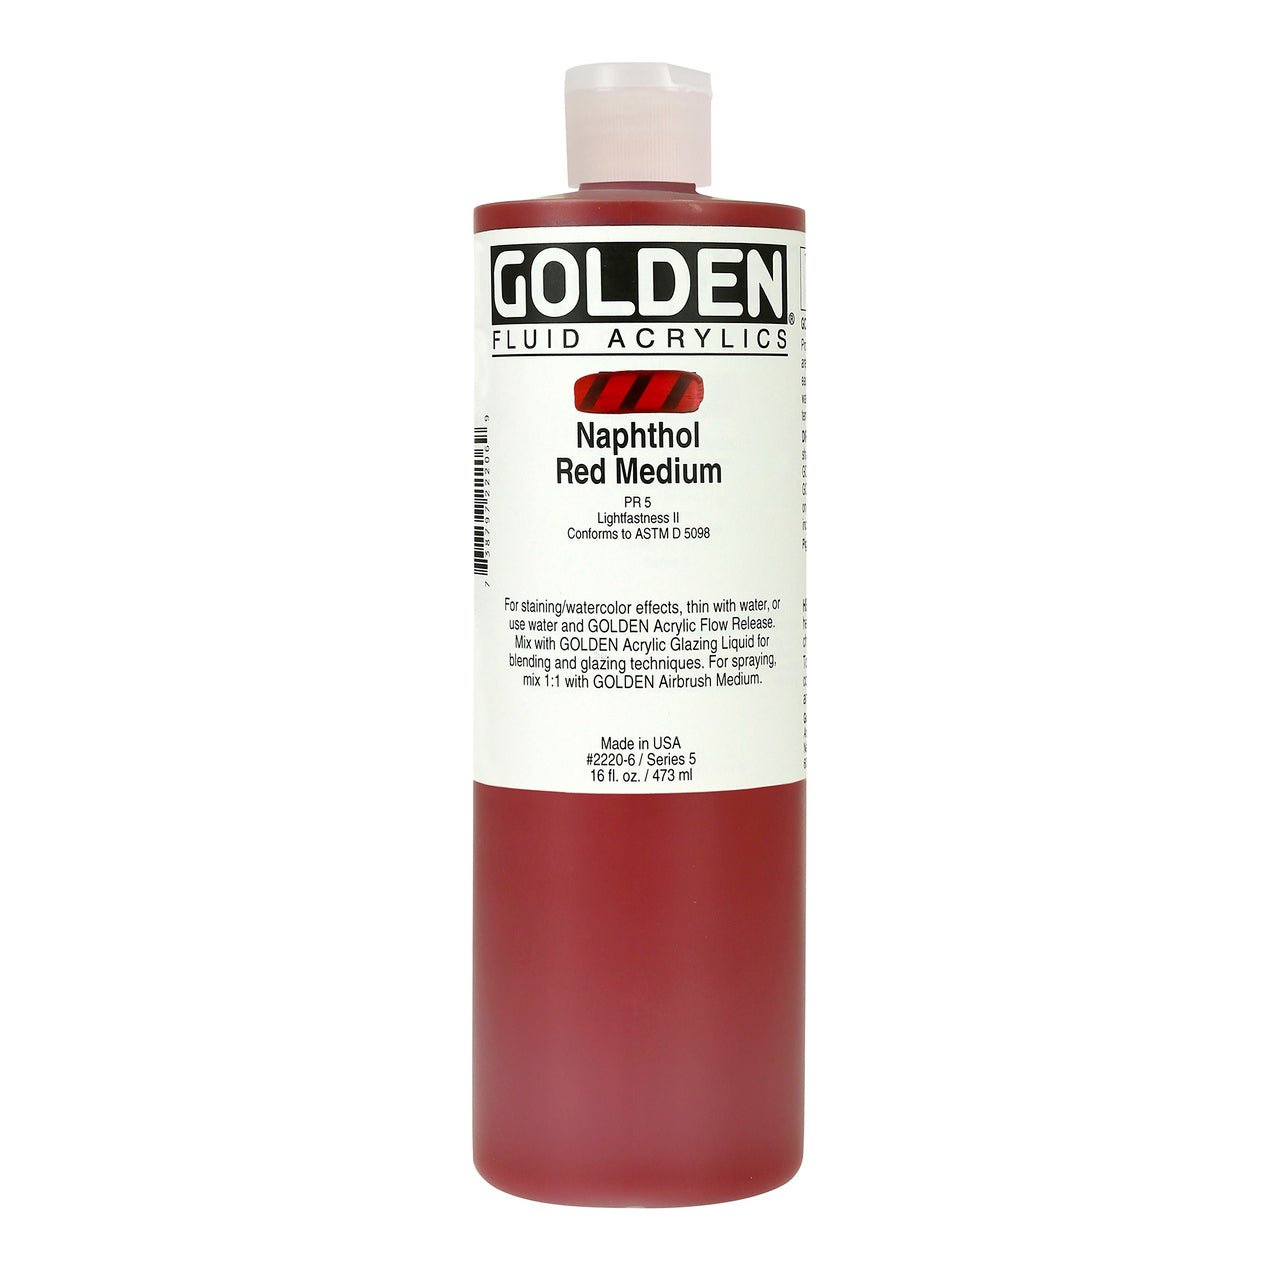 Golden Fluid Acrylic Naphthol Red Medium 16 oz - merriartist.com